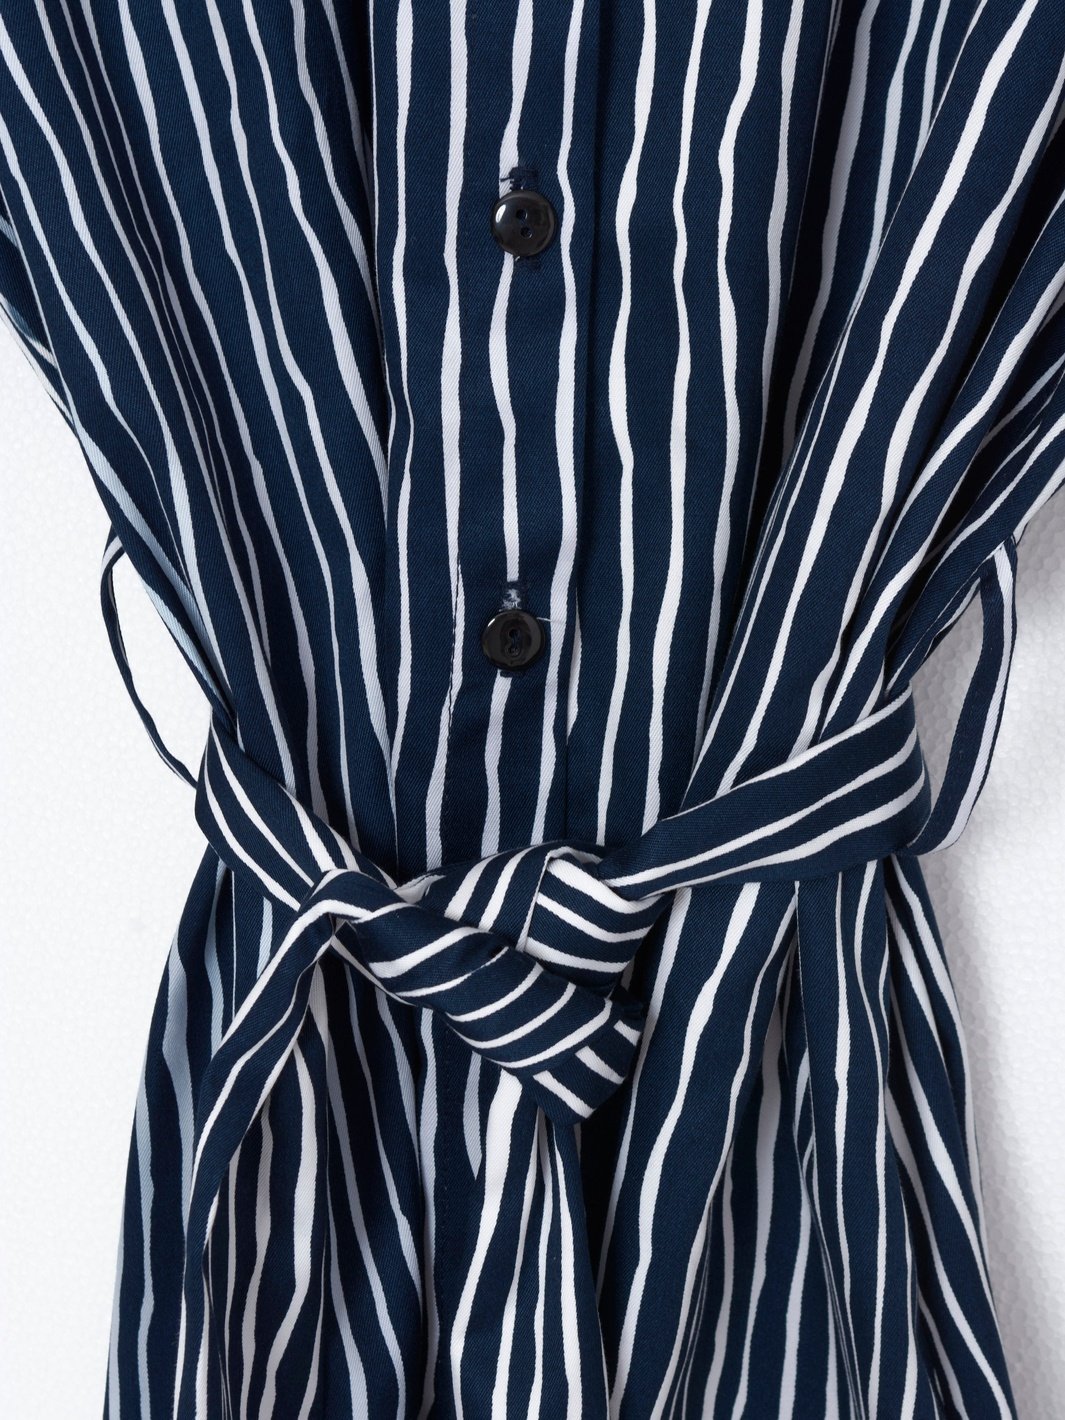 2020 Cavalli e Nastri chemisier dress with blue and white stripes